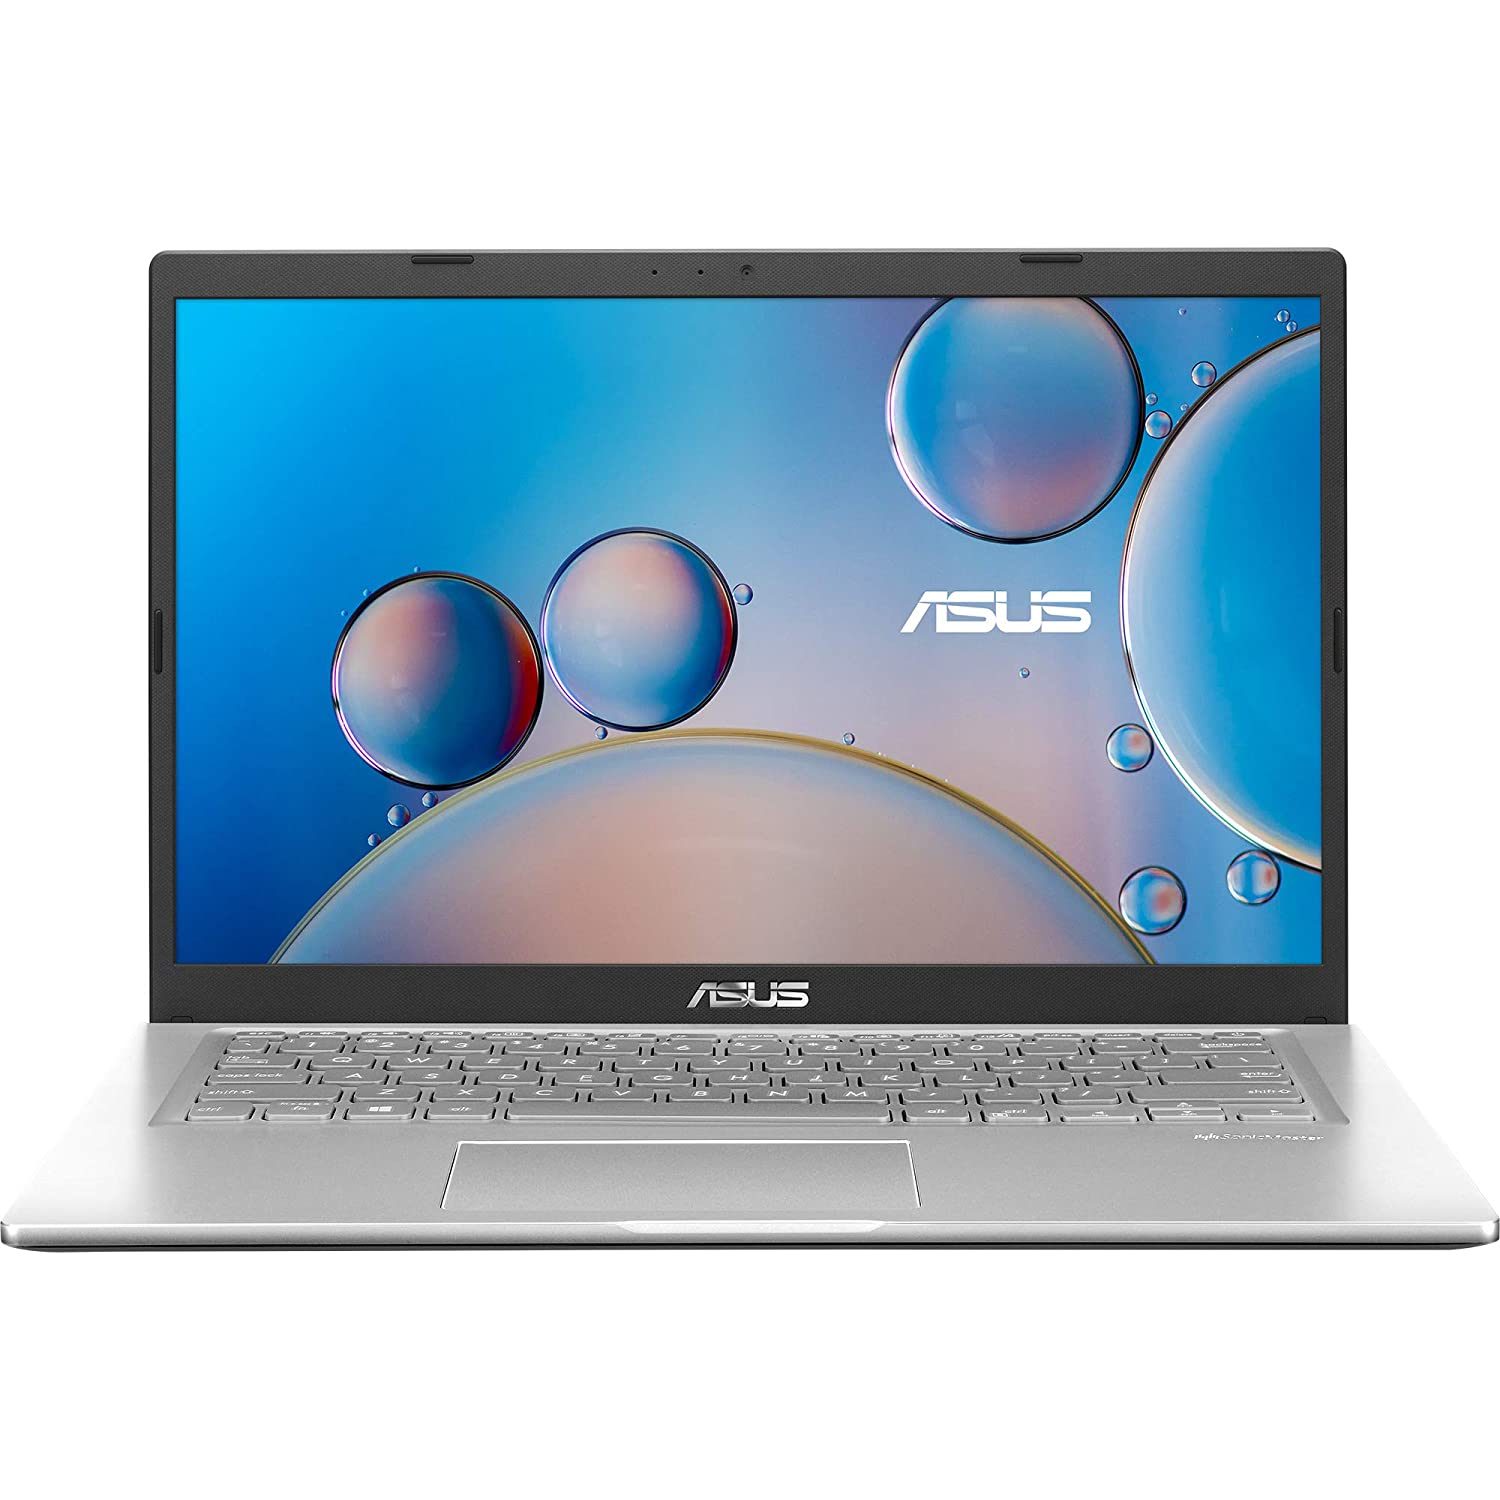 ASUS VivoBook 14 (2021), Intel Core i5-1035G1 10th Gen, (8GB RAM/512GB SSD/Office 2021/Windows 11/Integrated Graphics/Silver/1.6 Kg), X415JA-EB521WS 14-inch (35.56 cms) FHD Thin and Light Lap